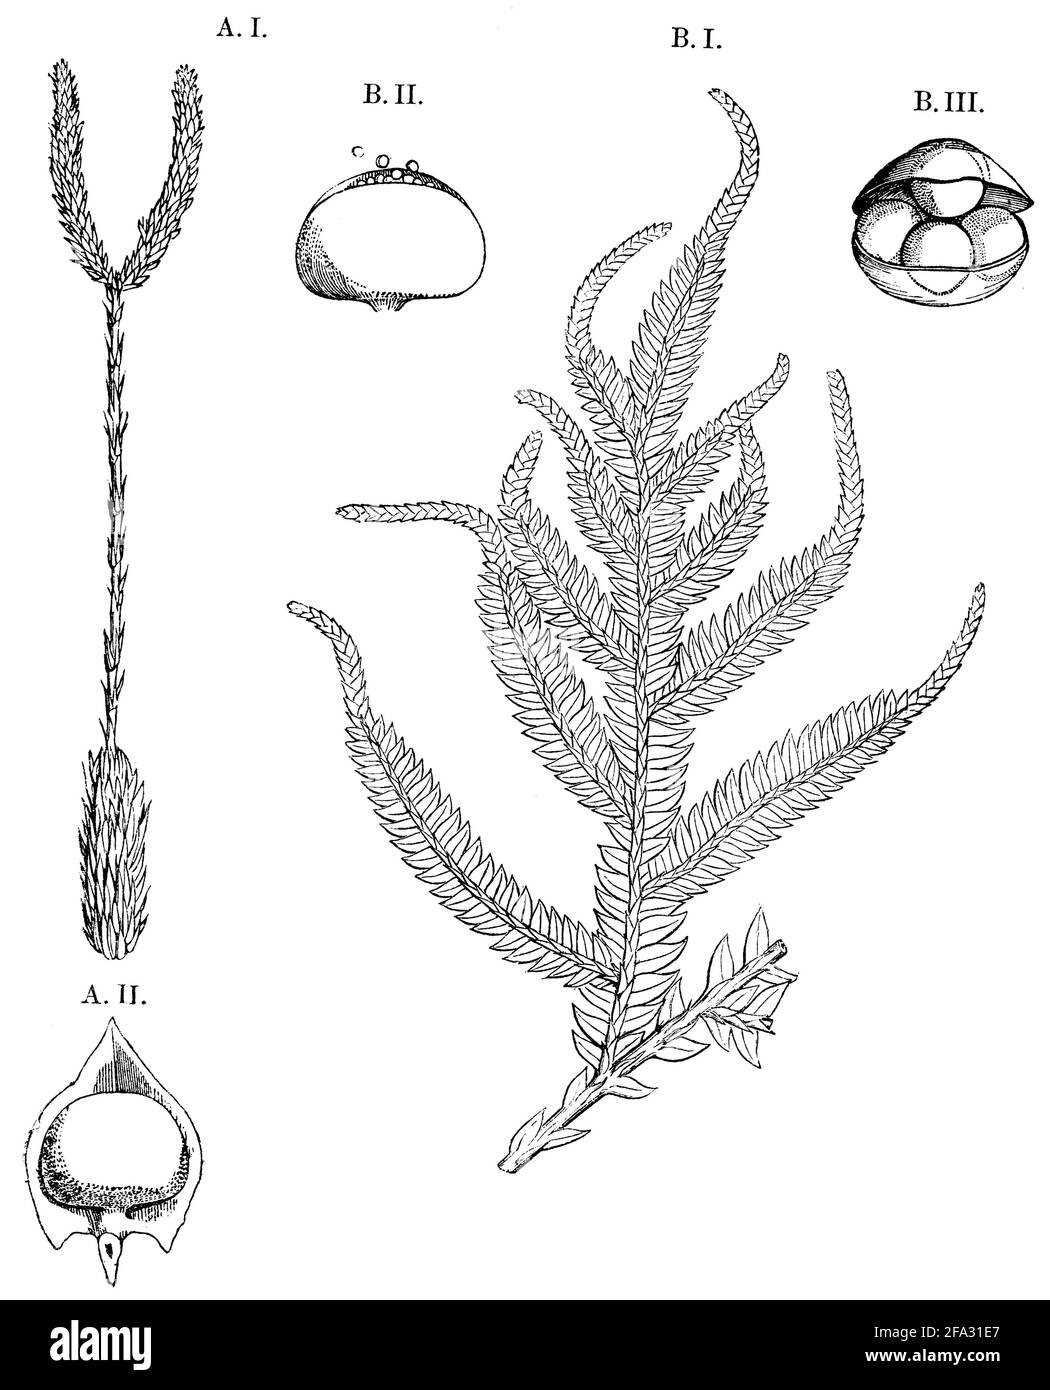 club moss / Lycopodium clavatum / Keulen-Bärlapp (botany book, 1875) Stock Photo